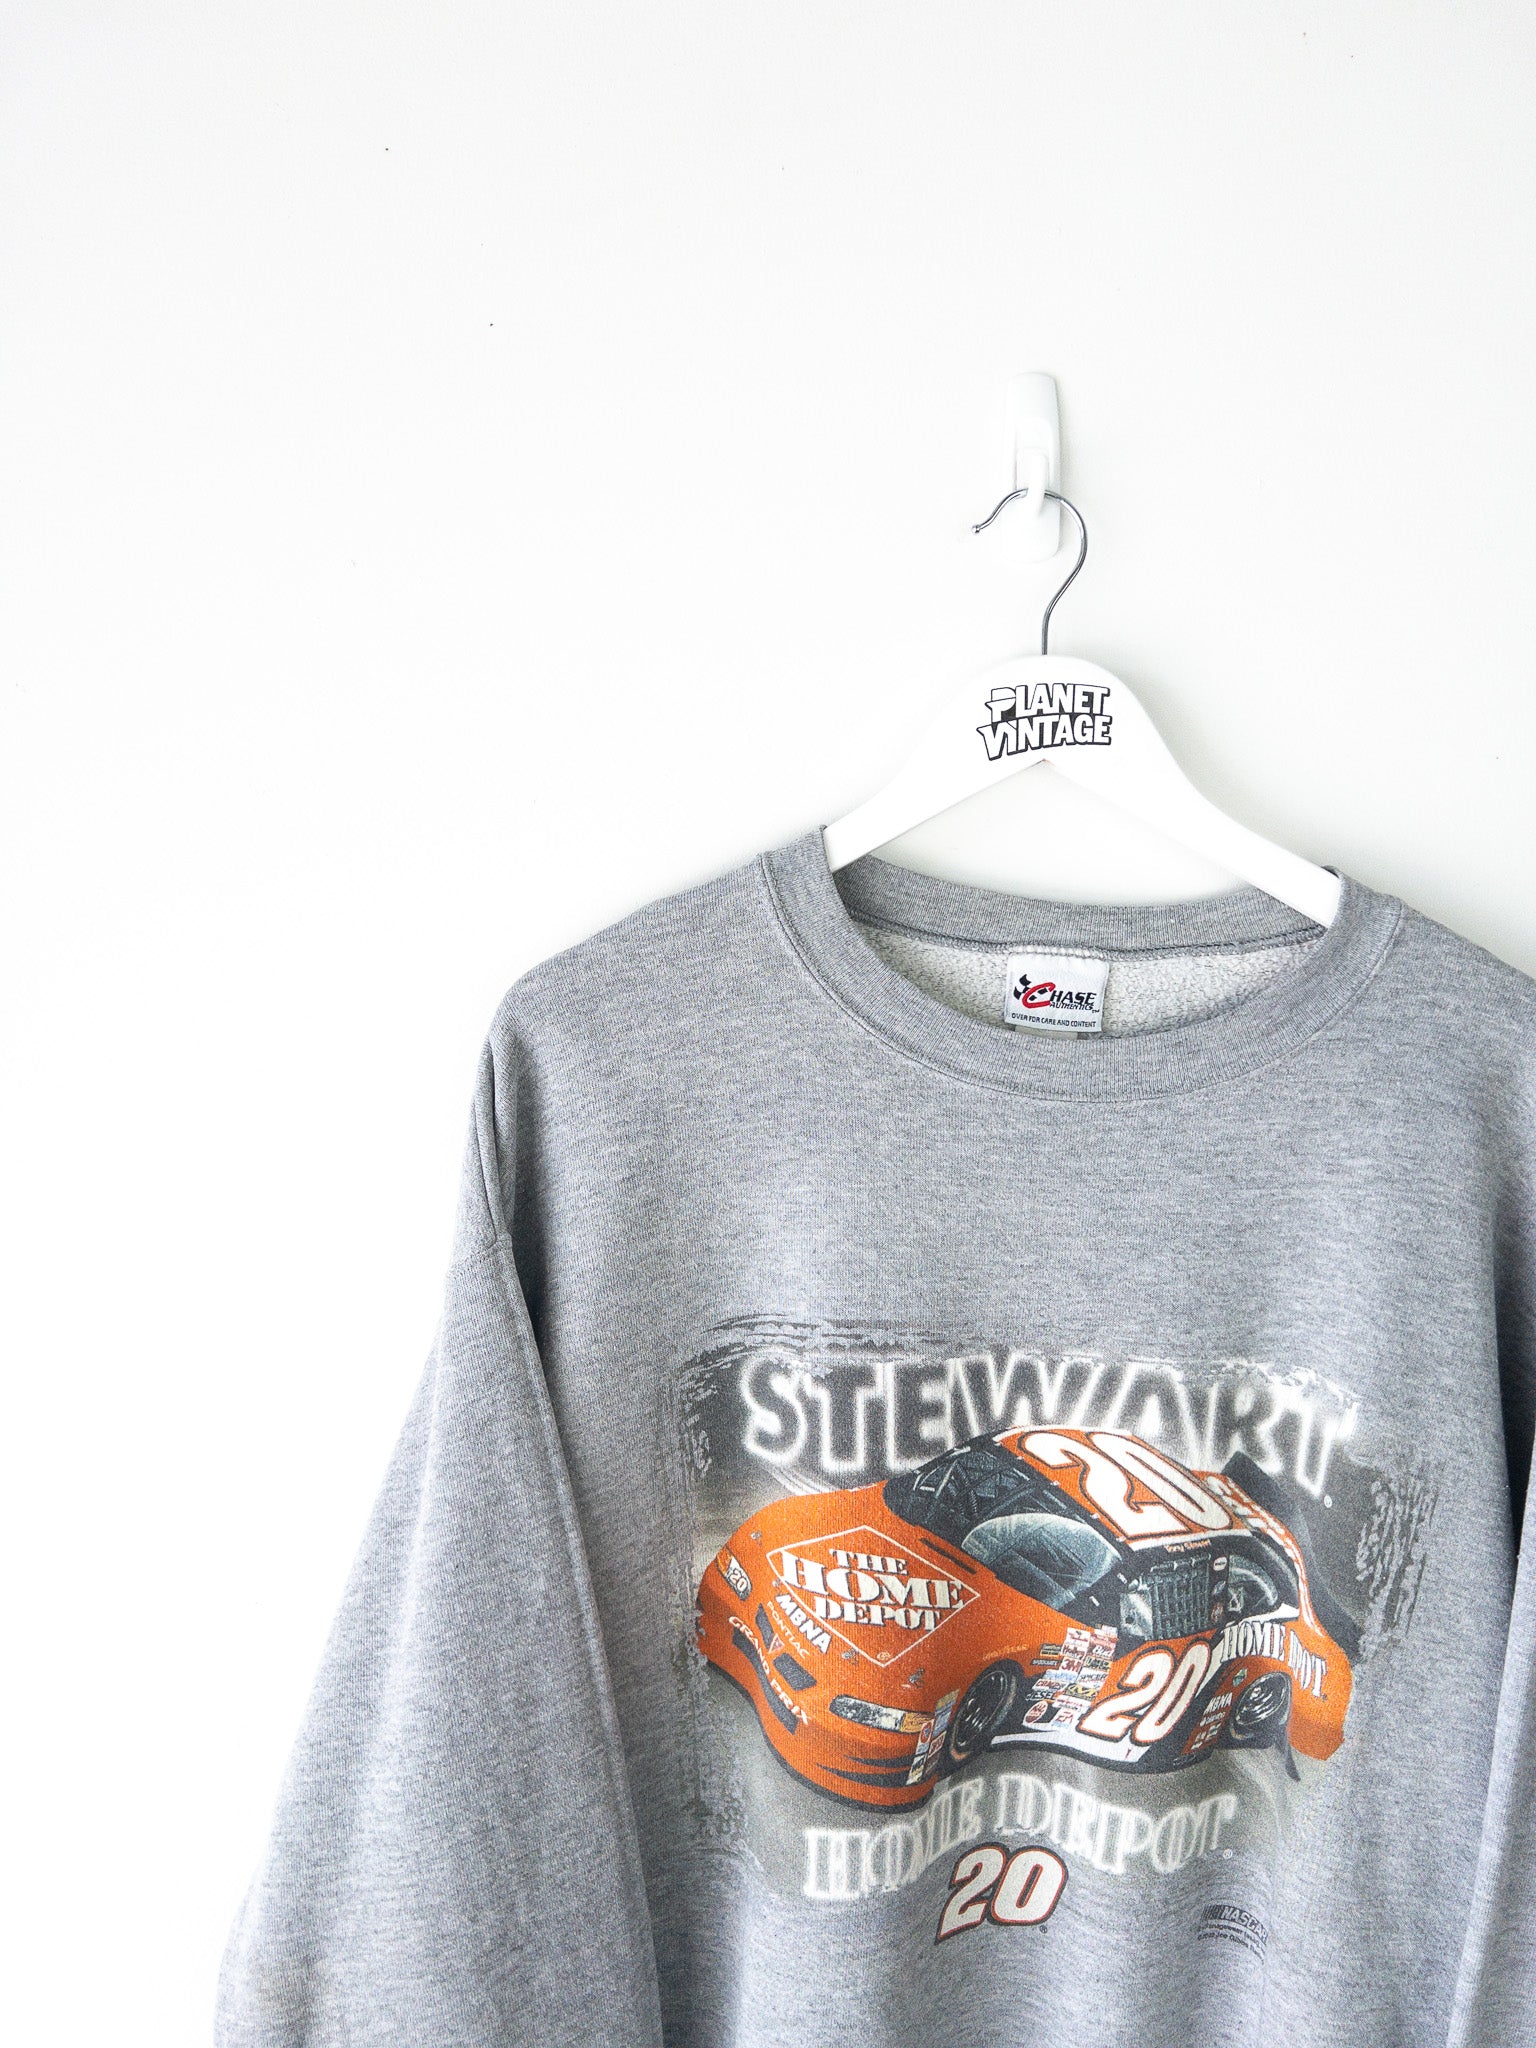 Vintage Tony Stewart 2002 Nascar Sweatshirt (L)